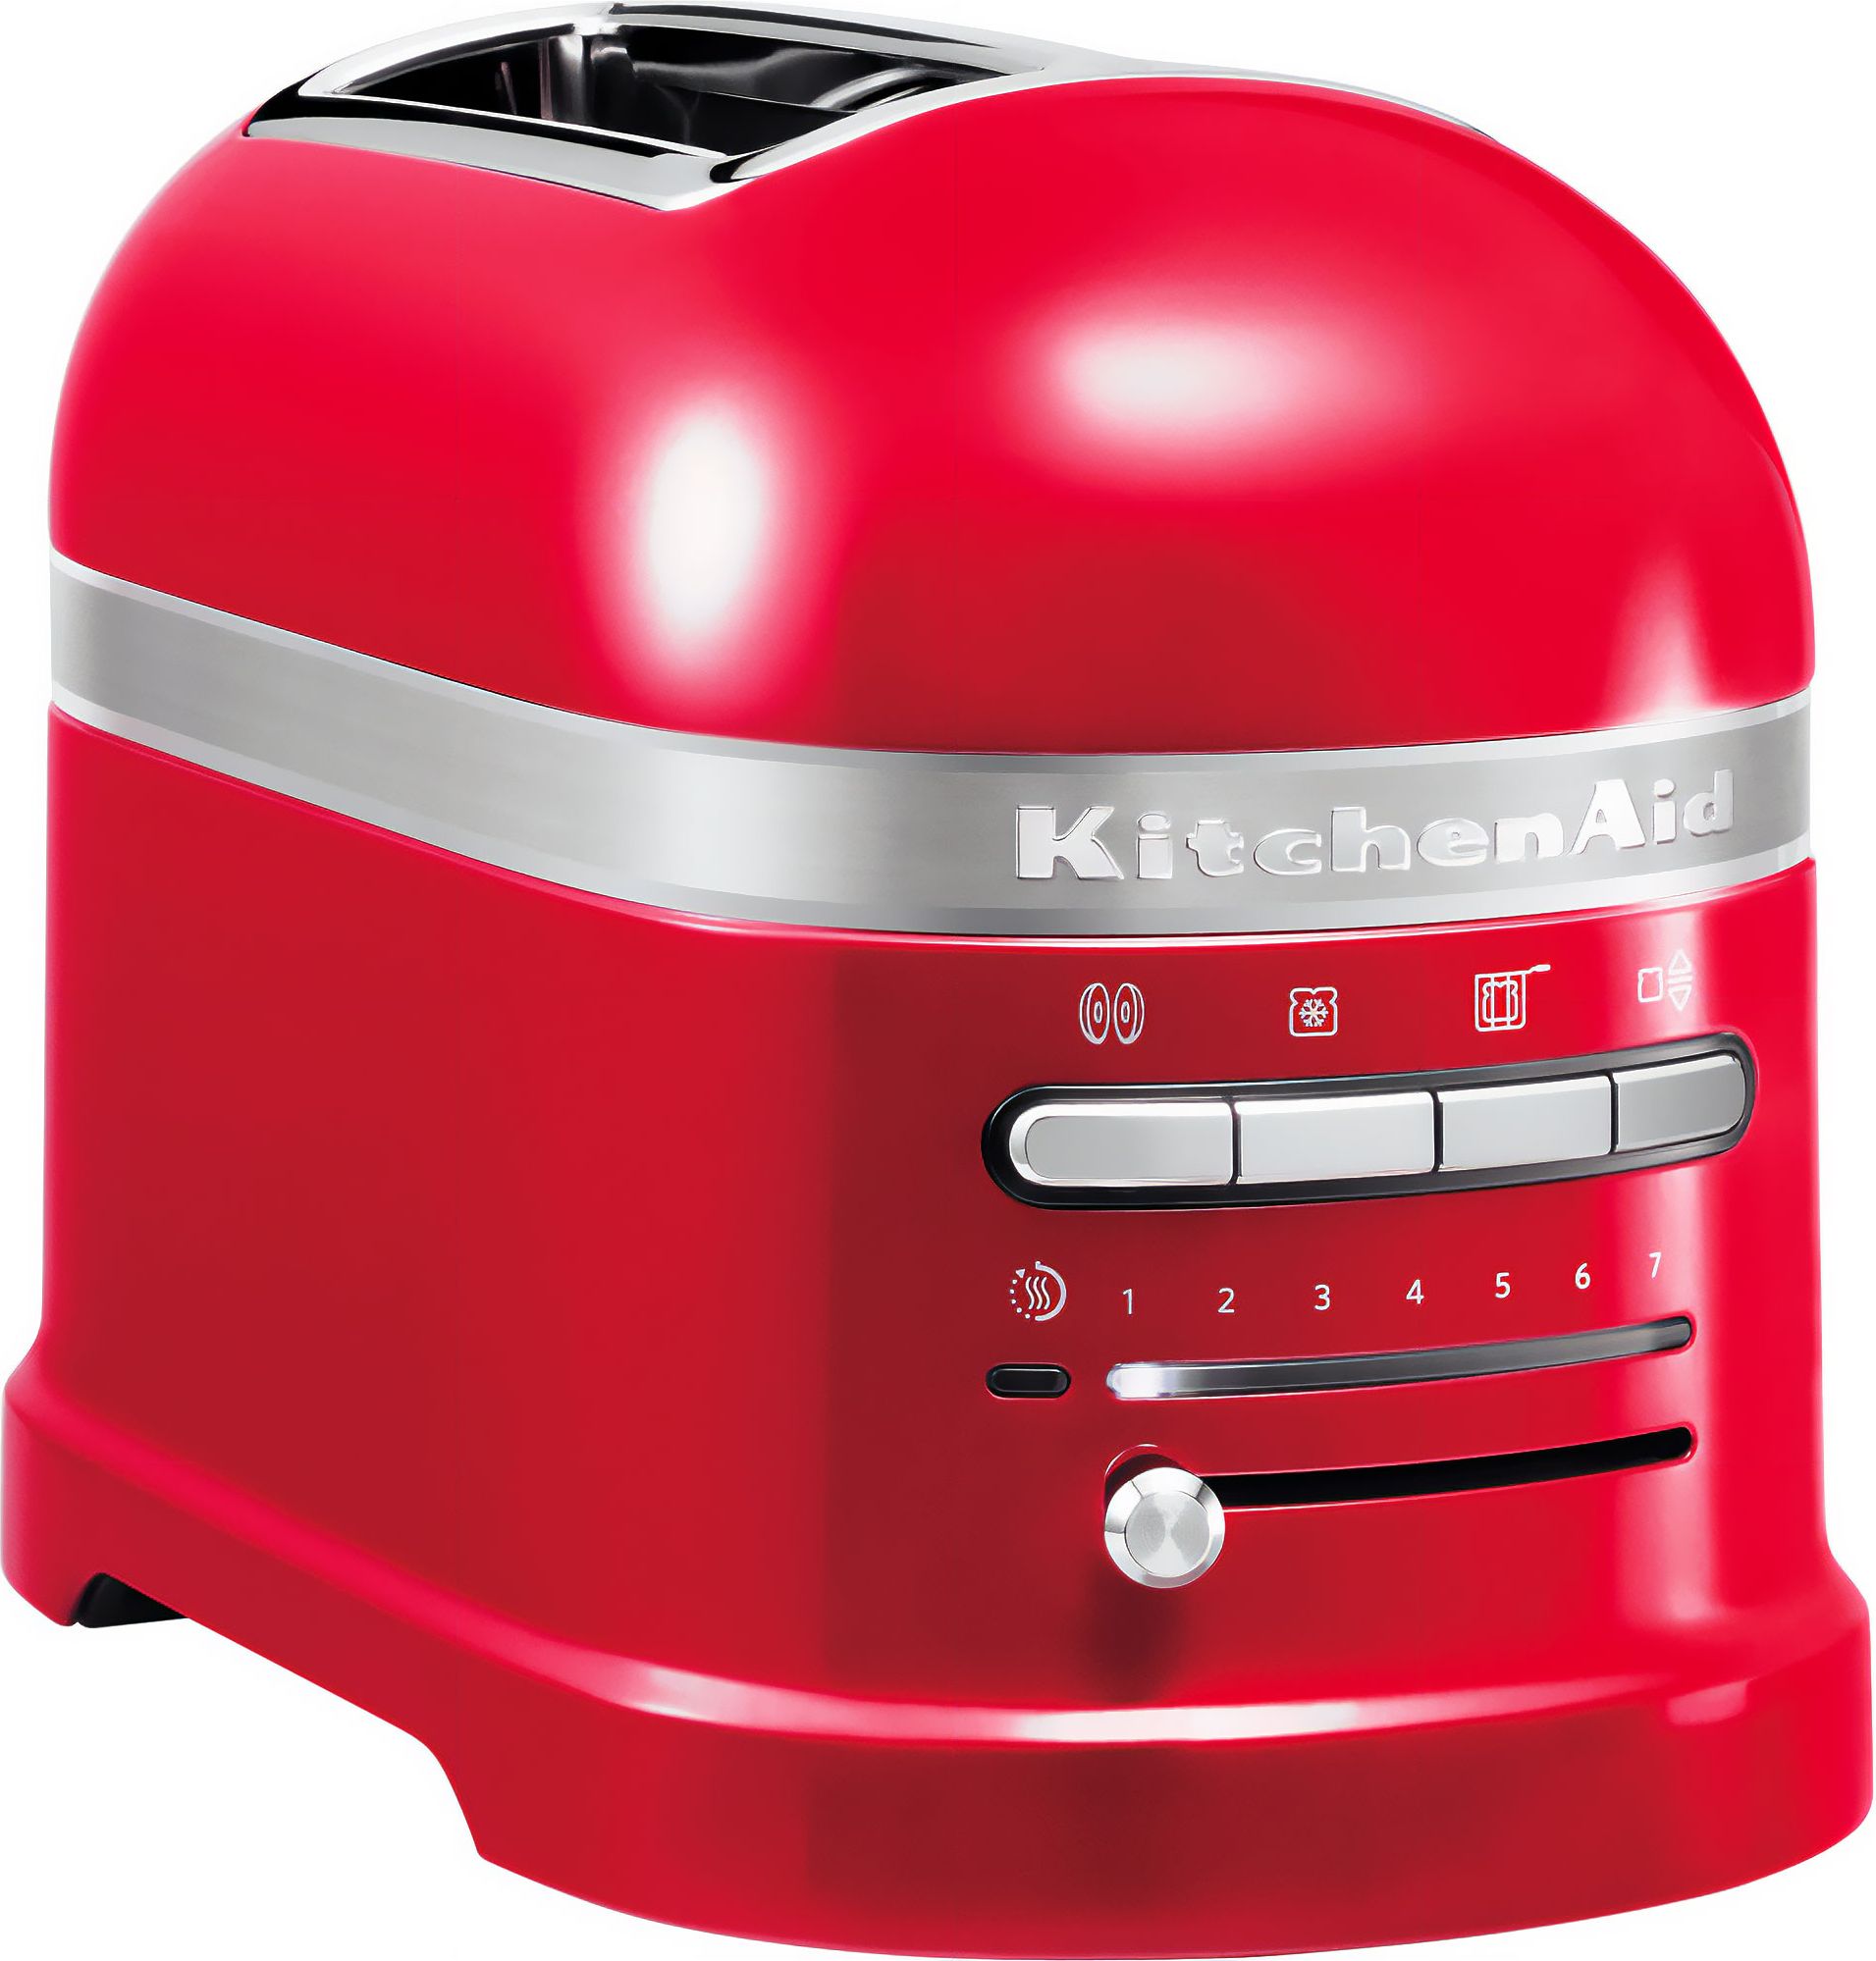 KitchenAid 5KMT2204BER 2 Slice Toaster - Empire Red, Red